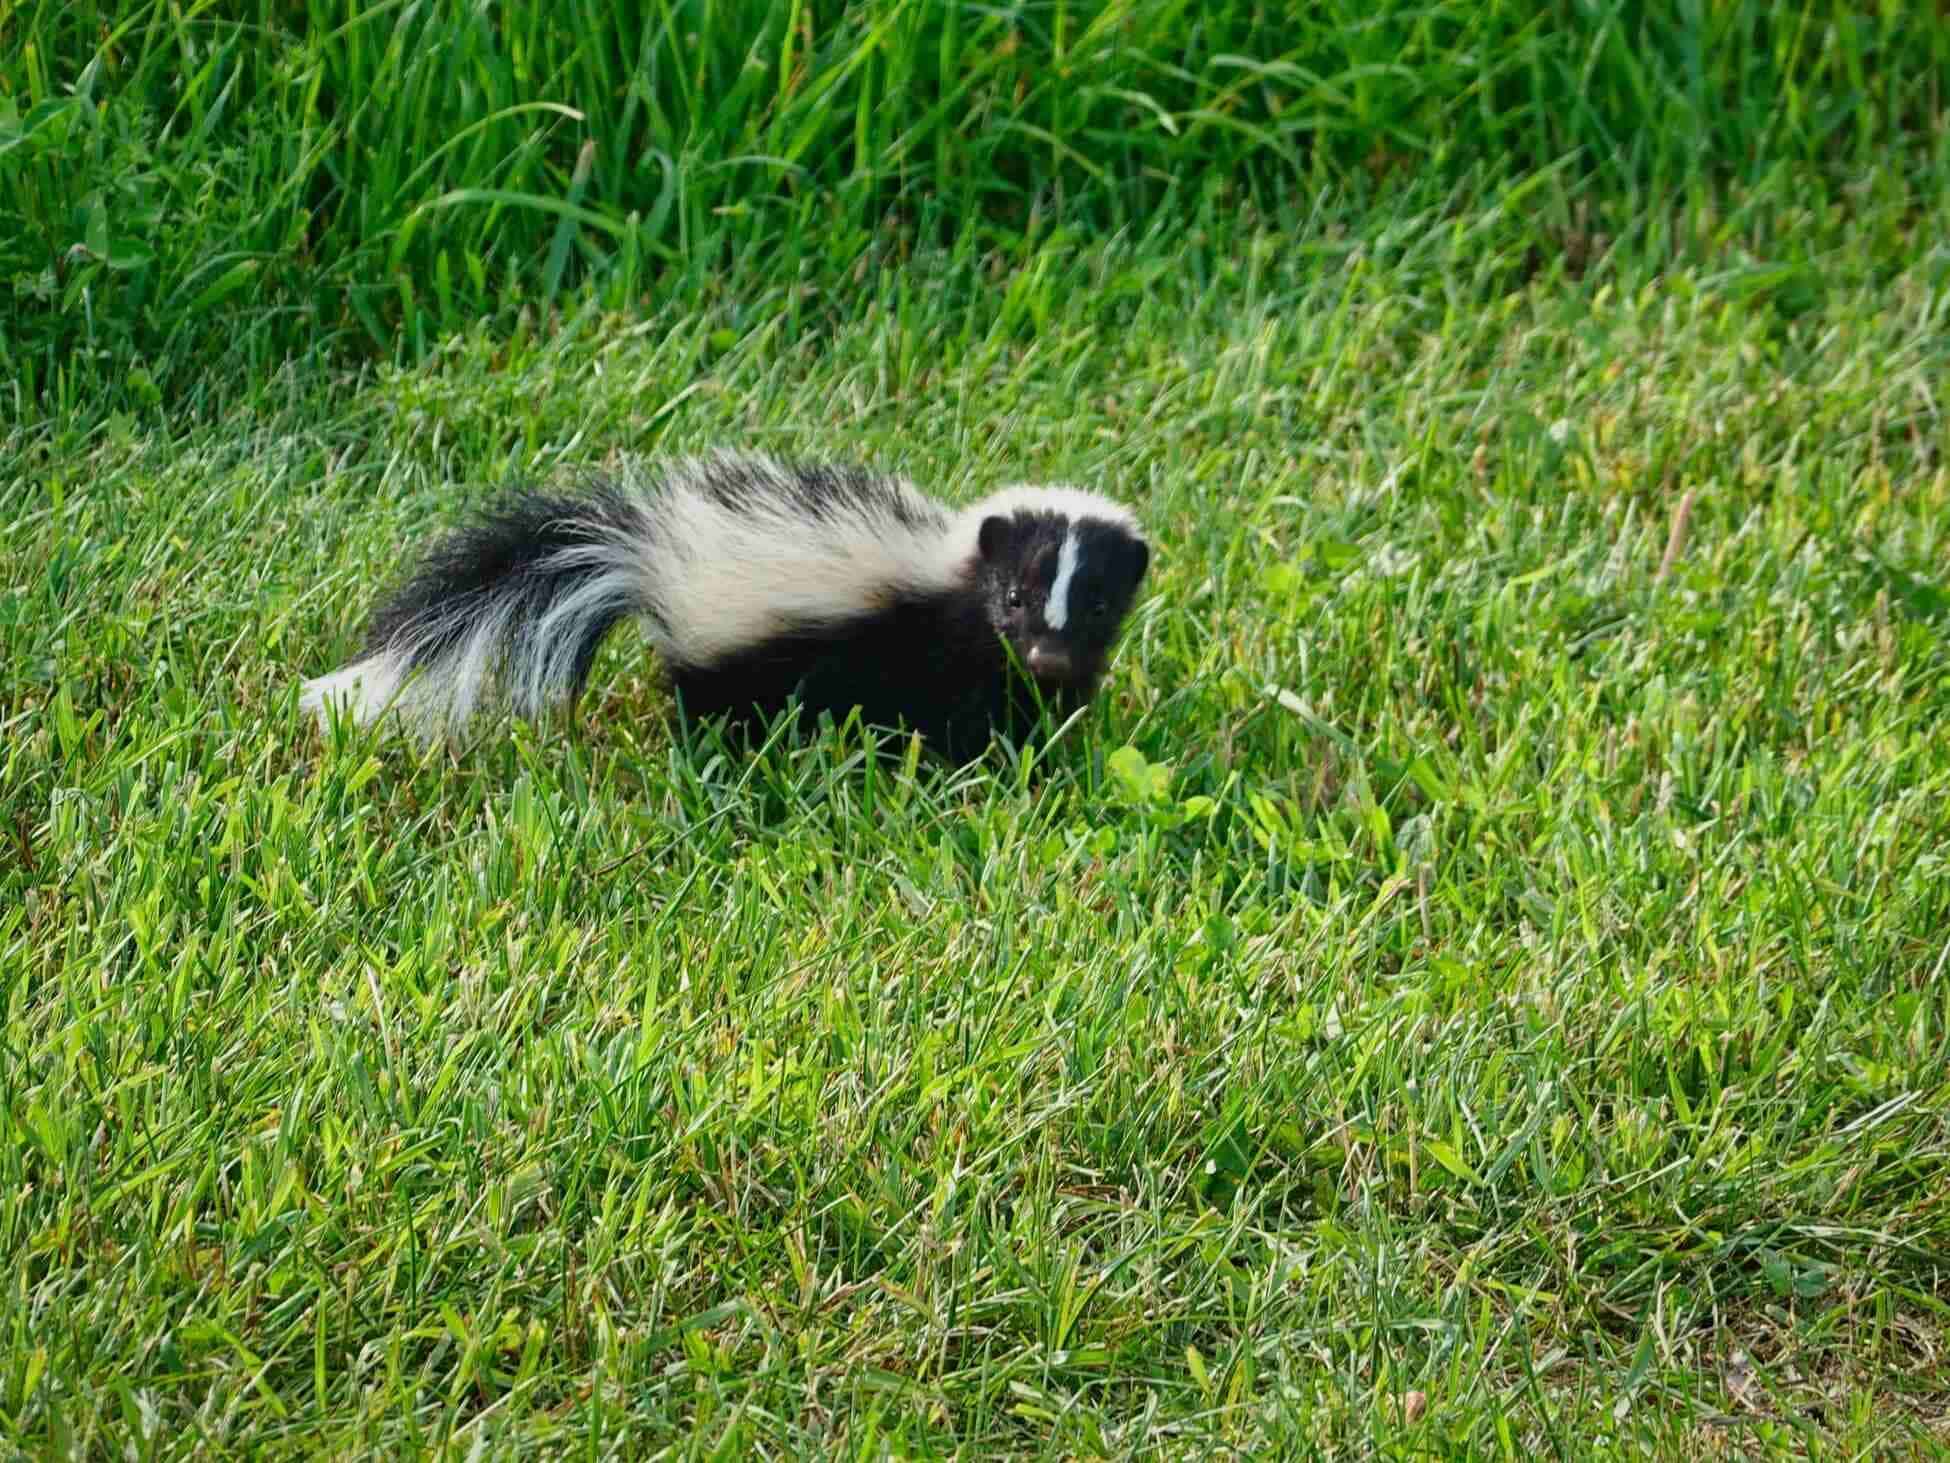 skunk grassy area